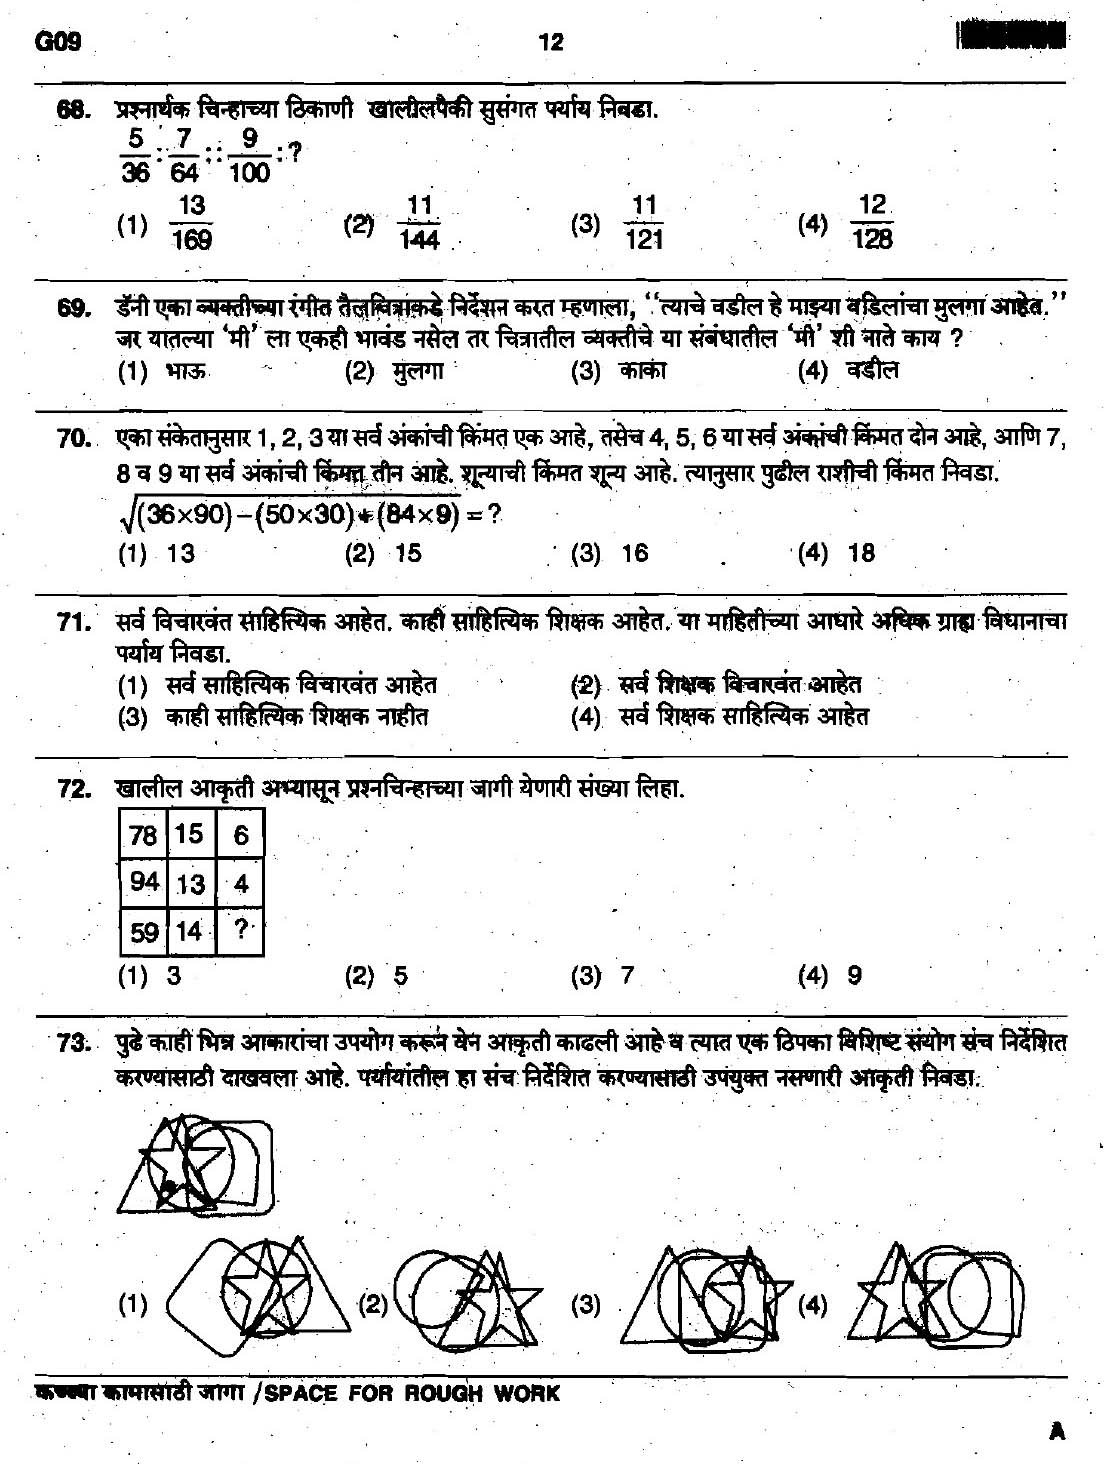 Maharashtra PSC Clerk Typist Preliminary Exam Question Paper 2017 11